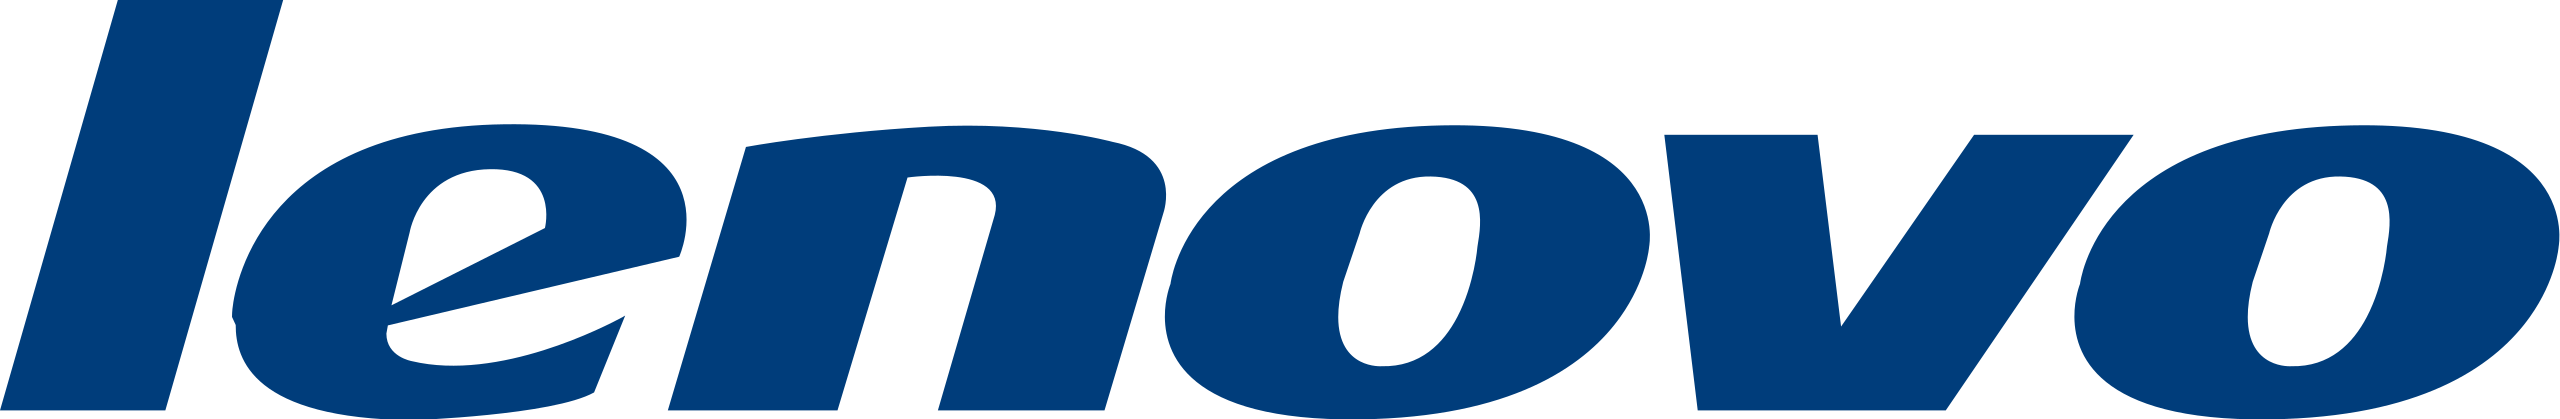 Lenovo_logo_(English).svg